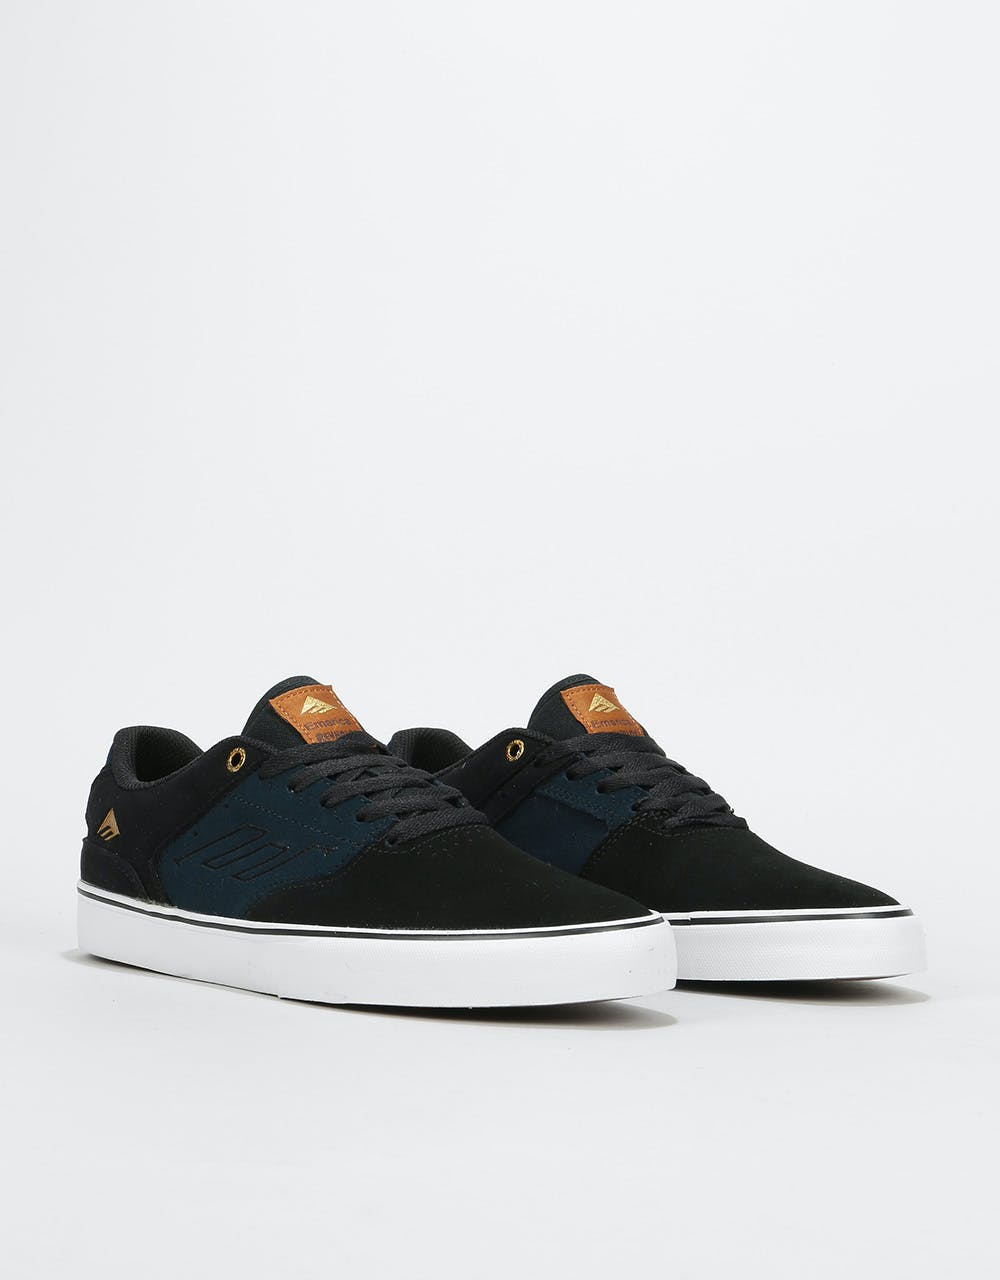 Emerica Reynolds Low Vulc Skate Shoes - Black/Navy